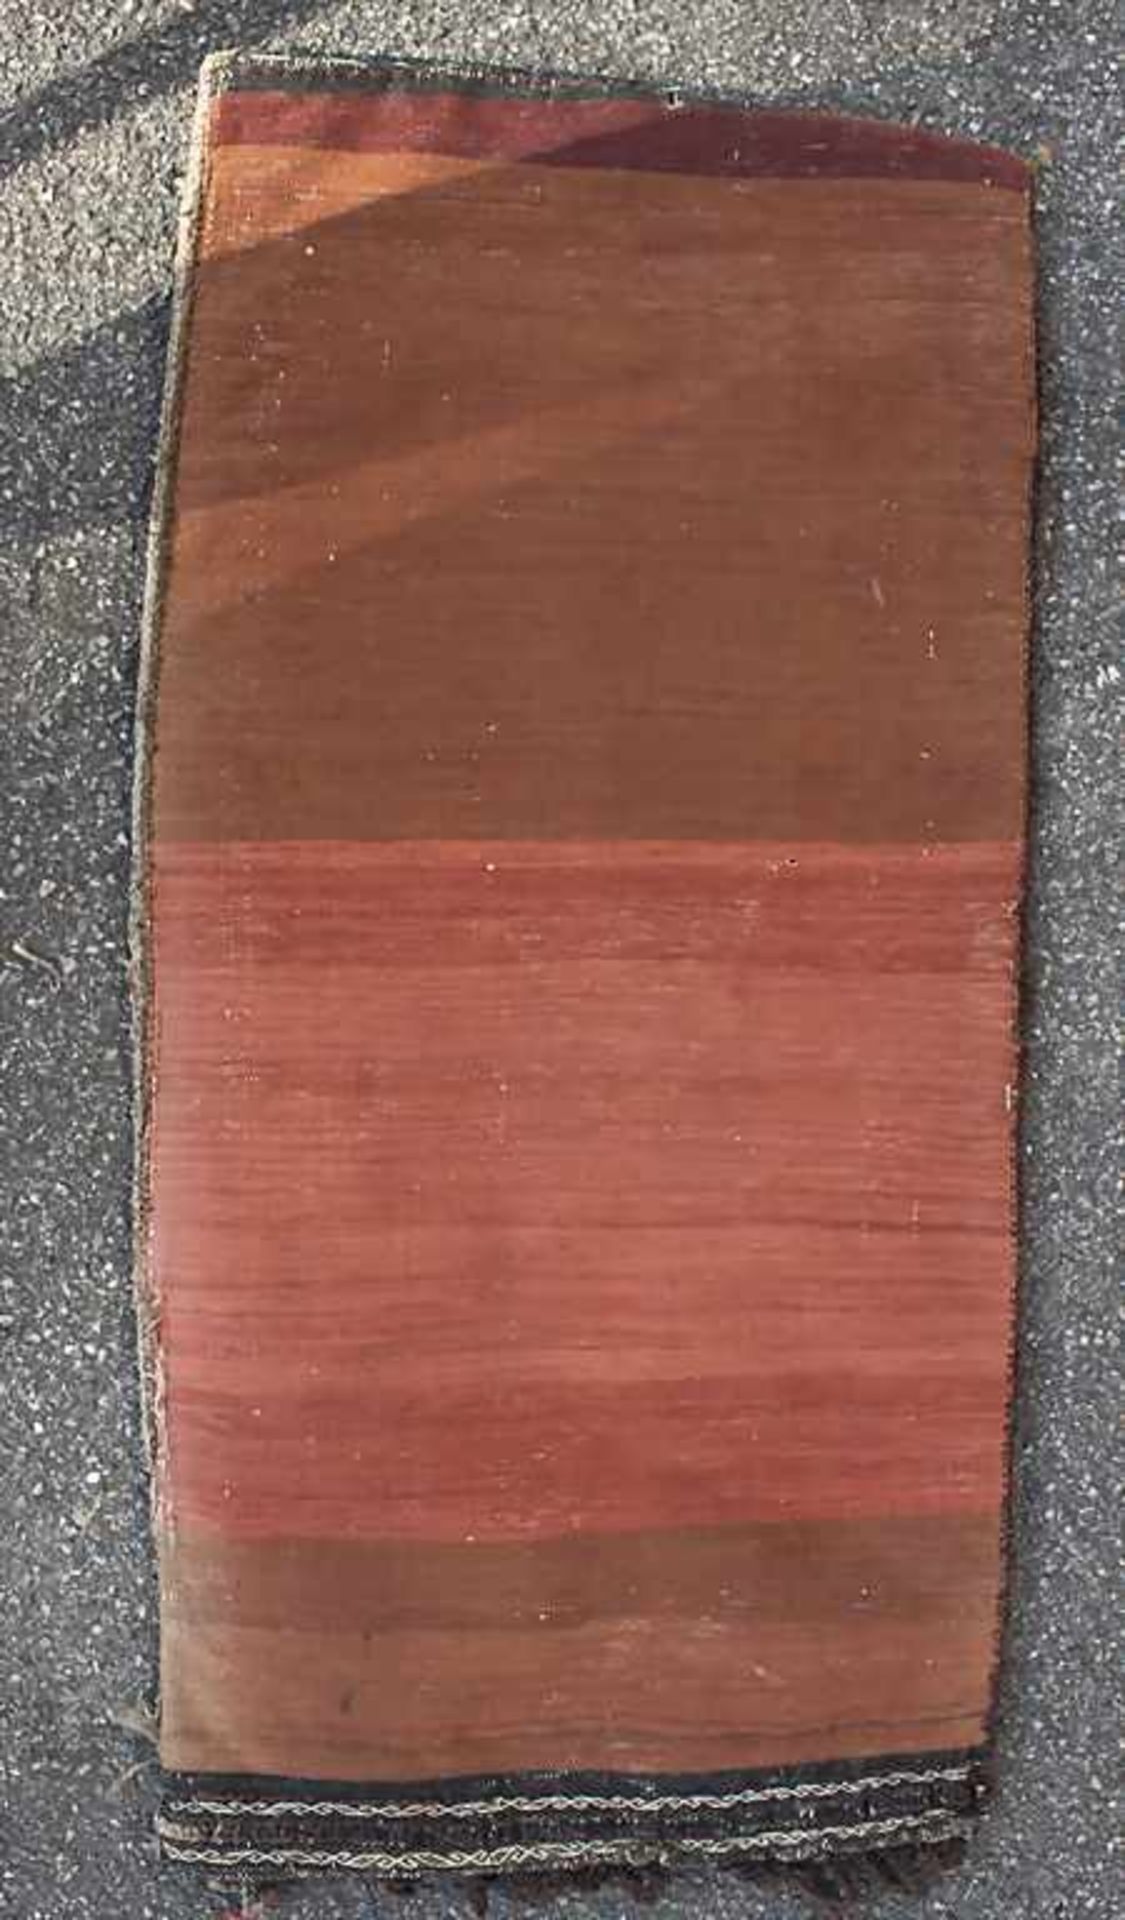 Orientteppich, Zelttasche / An oriental carpet, tentbag - Bild 3 aus 3